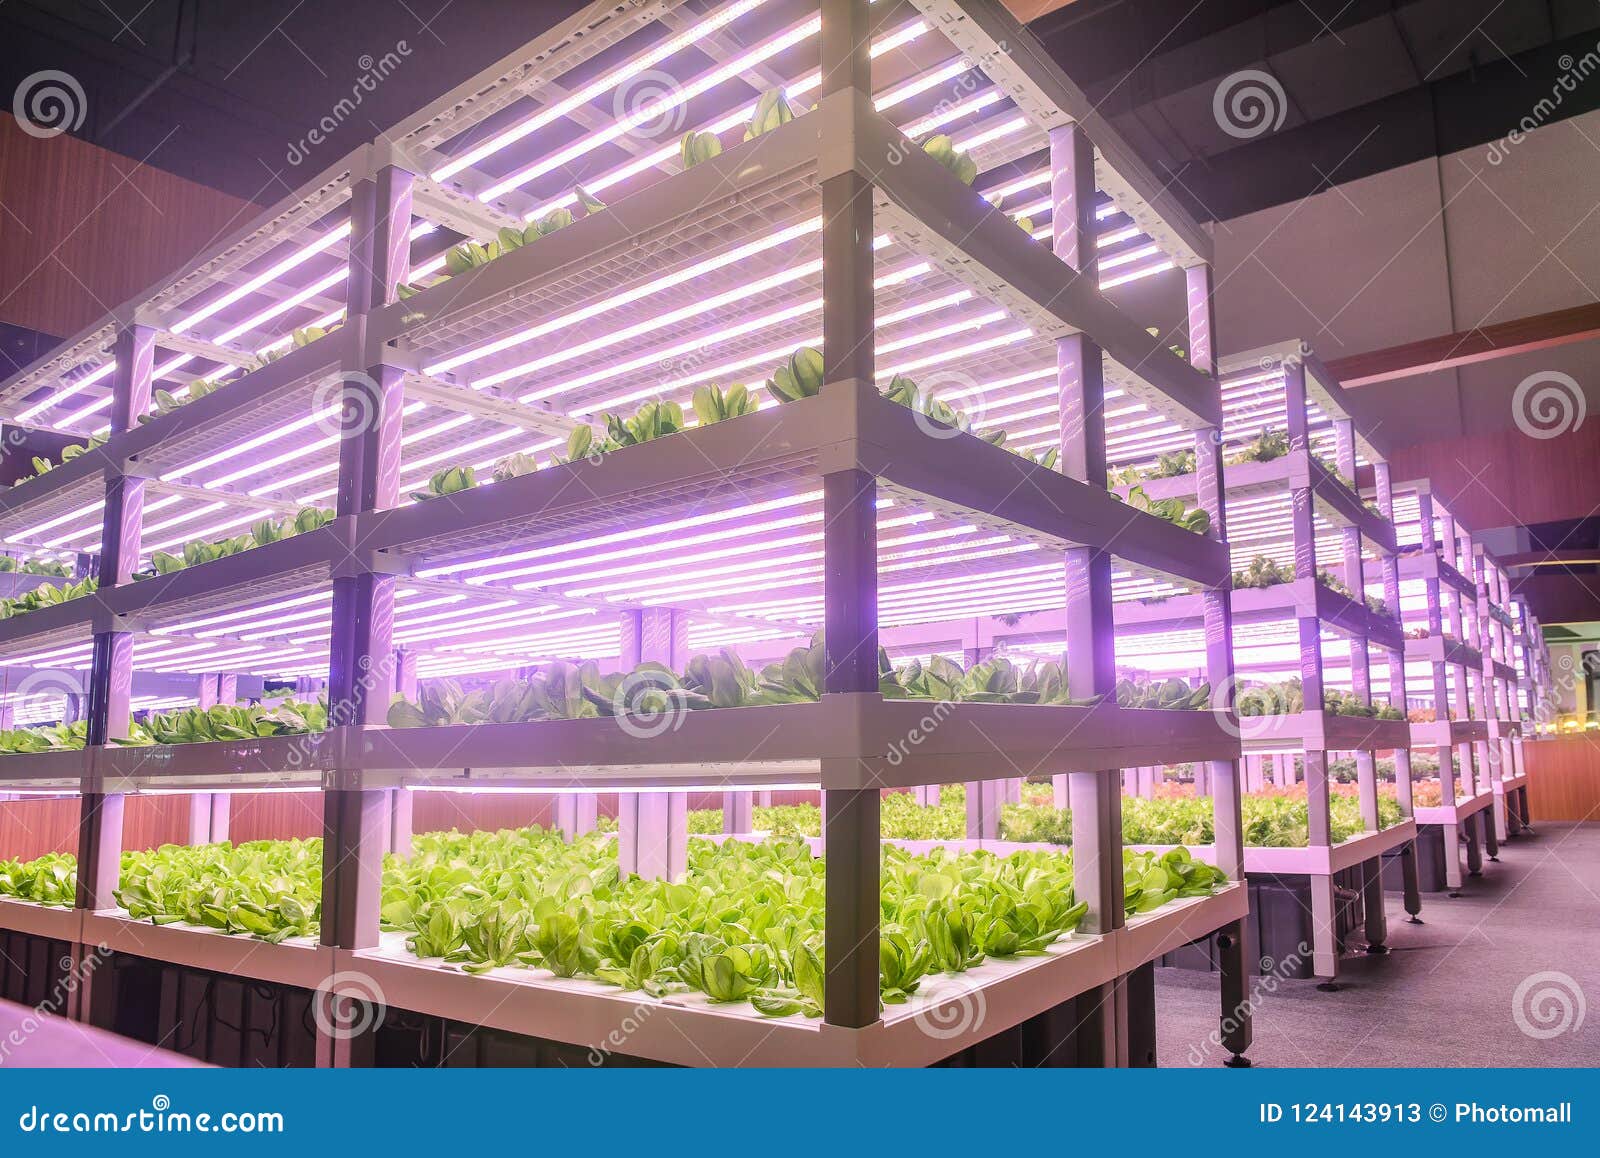 modern vertical agriculture indoor farm